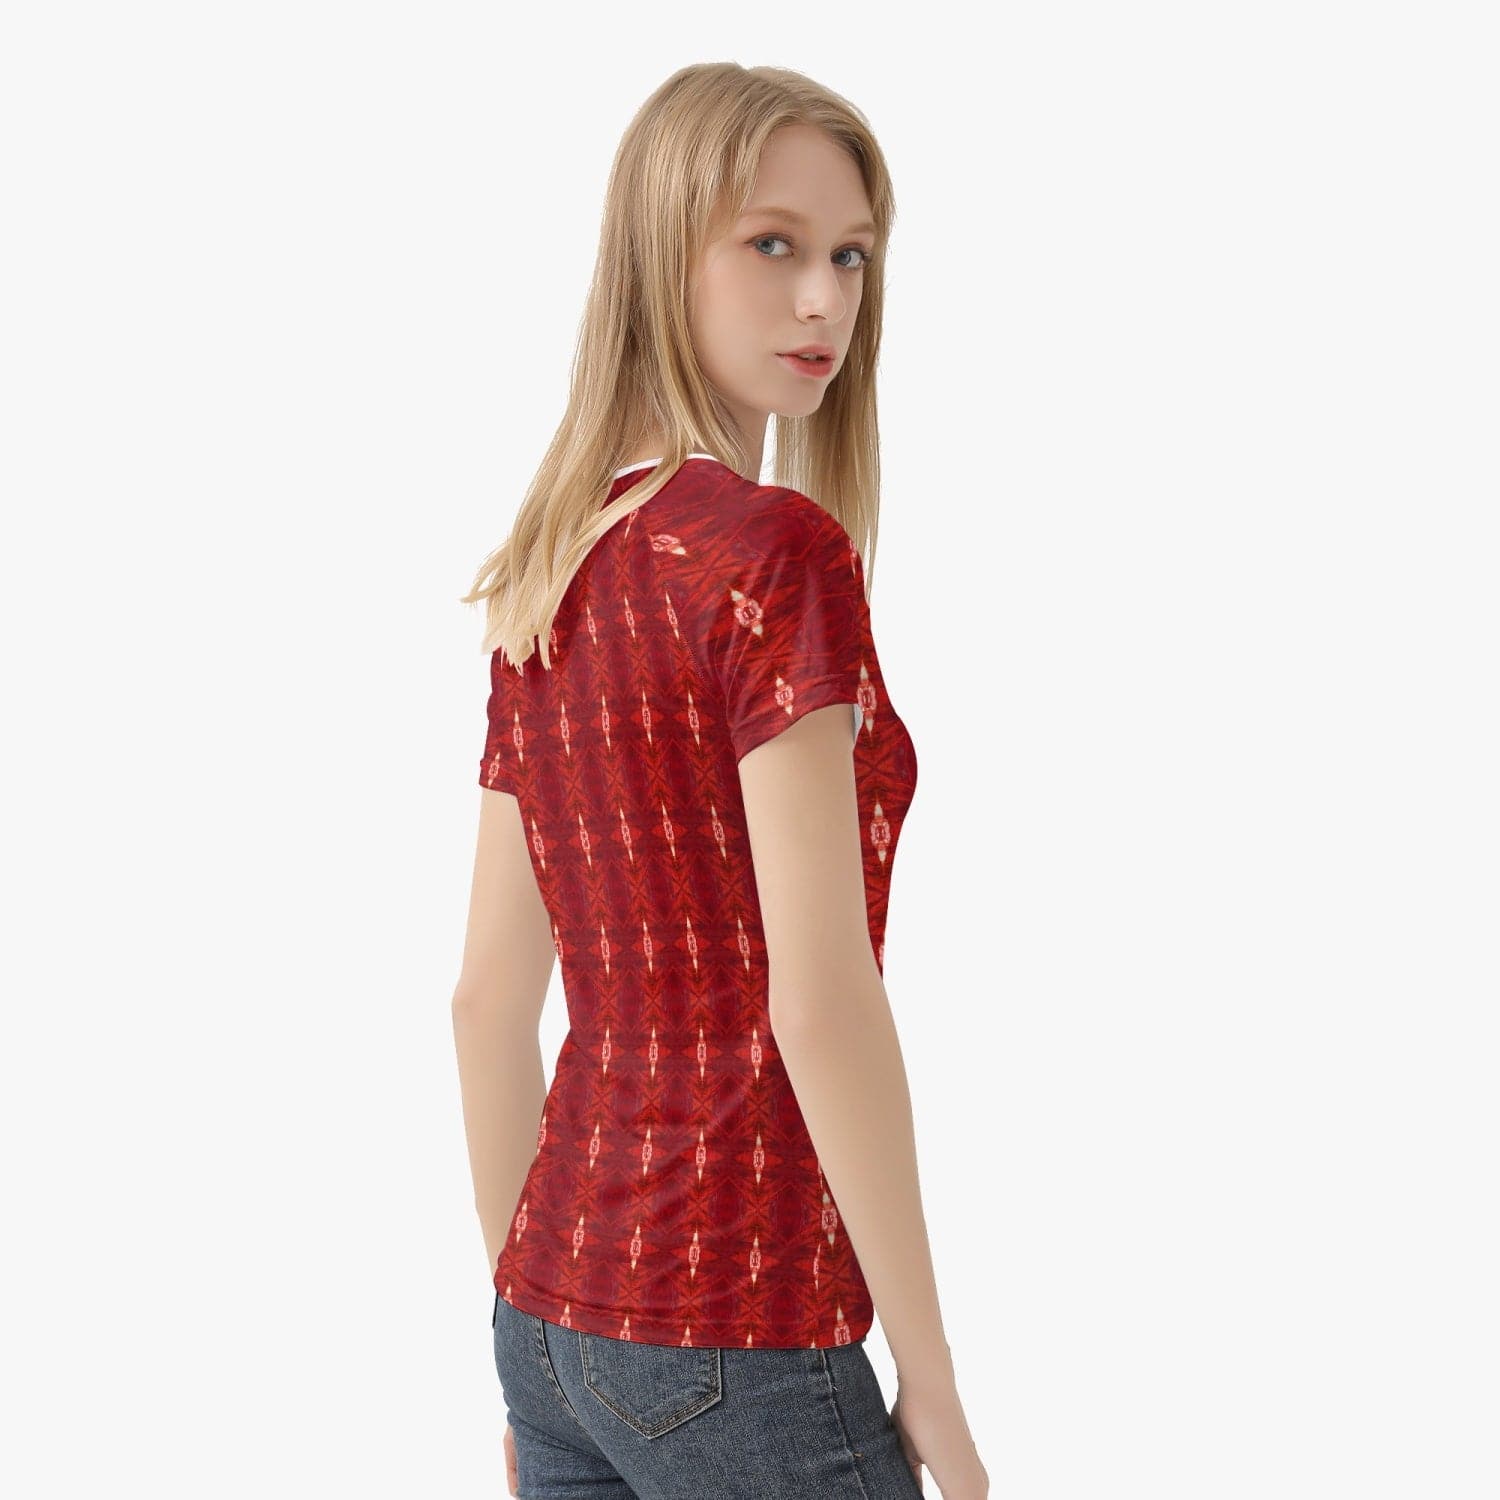 Red Bal Masqué, Handmade Stylish Women T-shirt Sports/ Yoga Top, by Sensus Studio Design